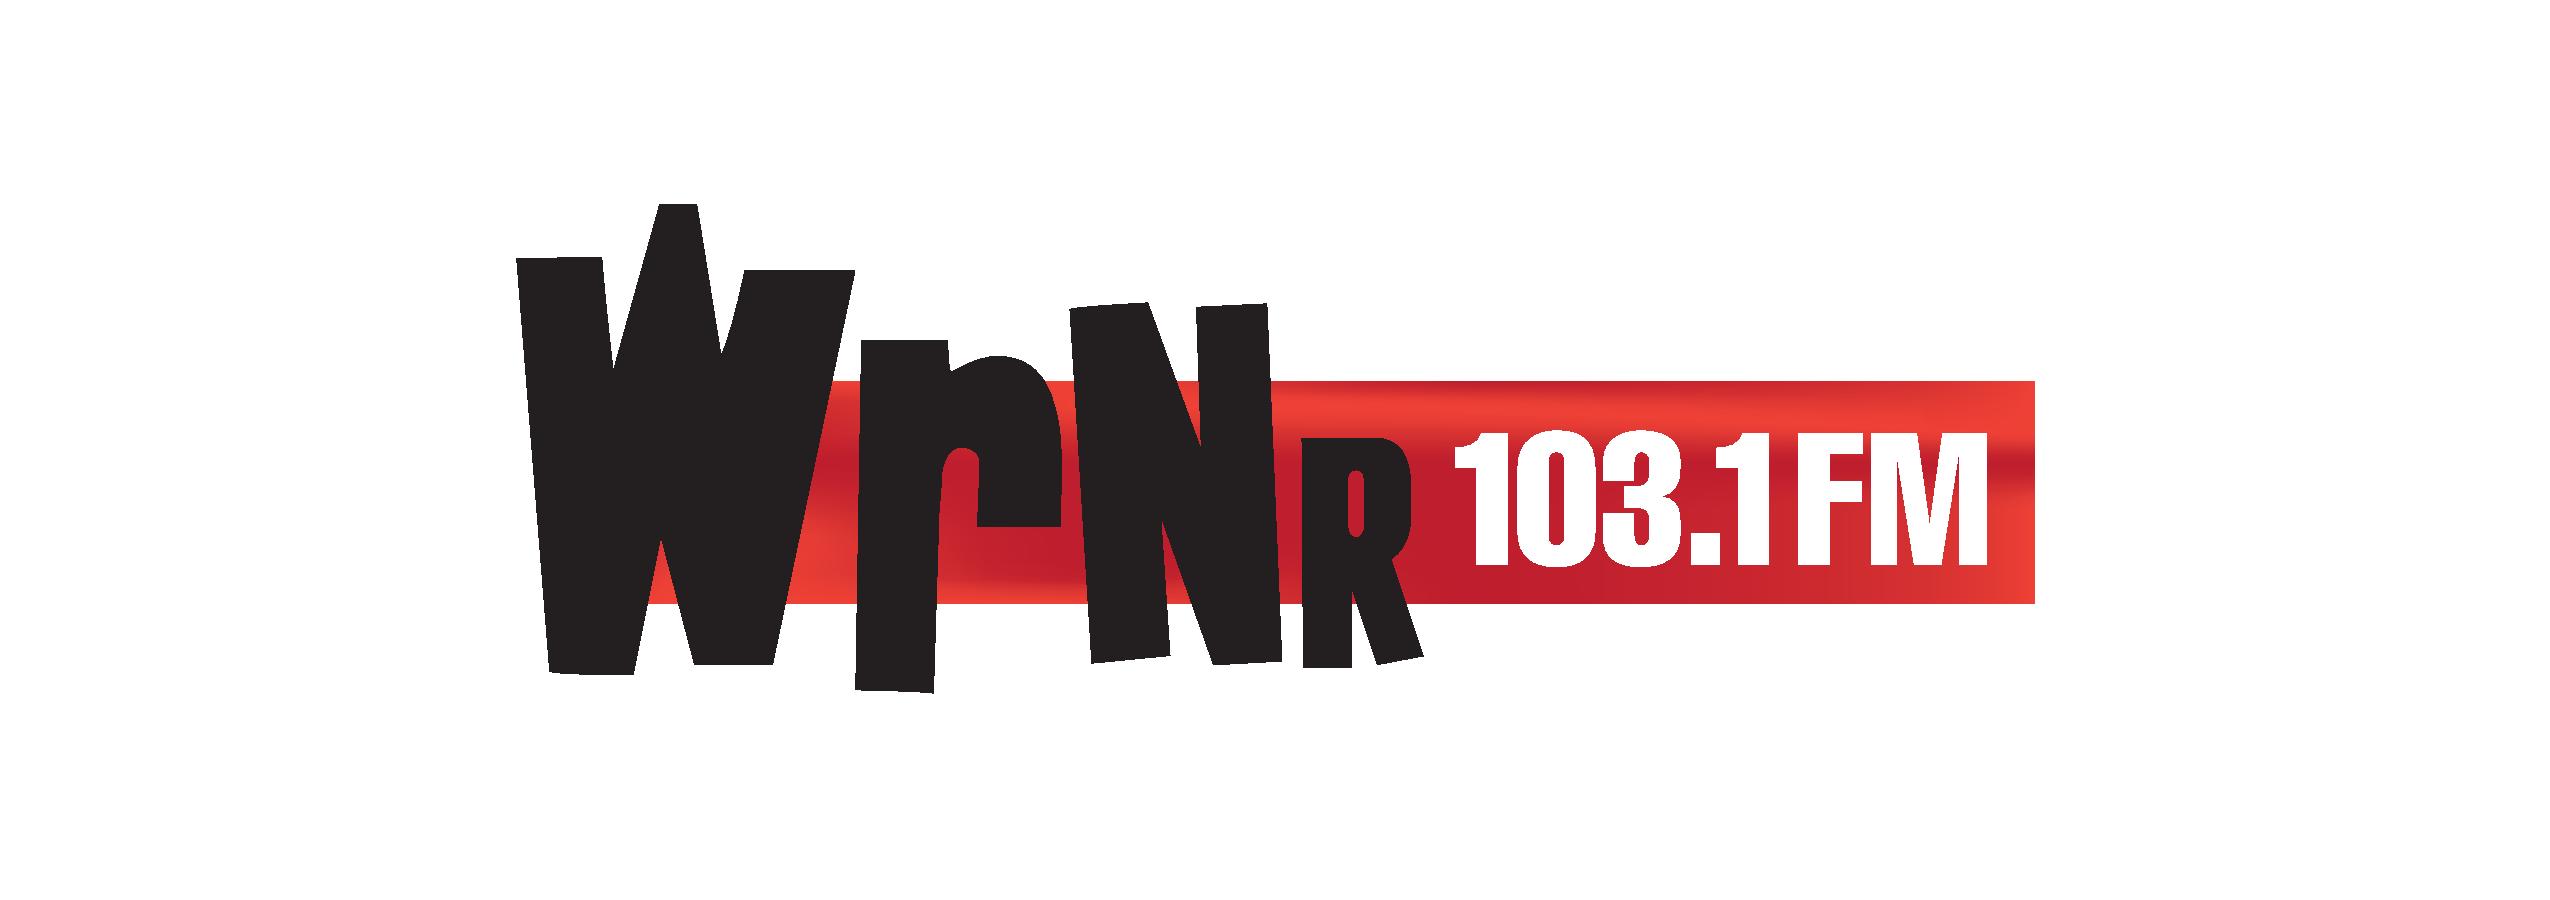 WRNR Radio!